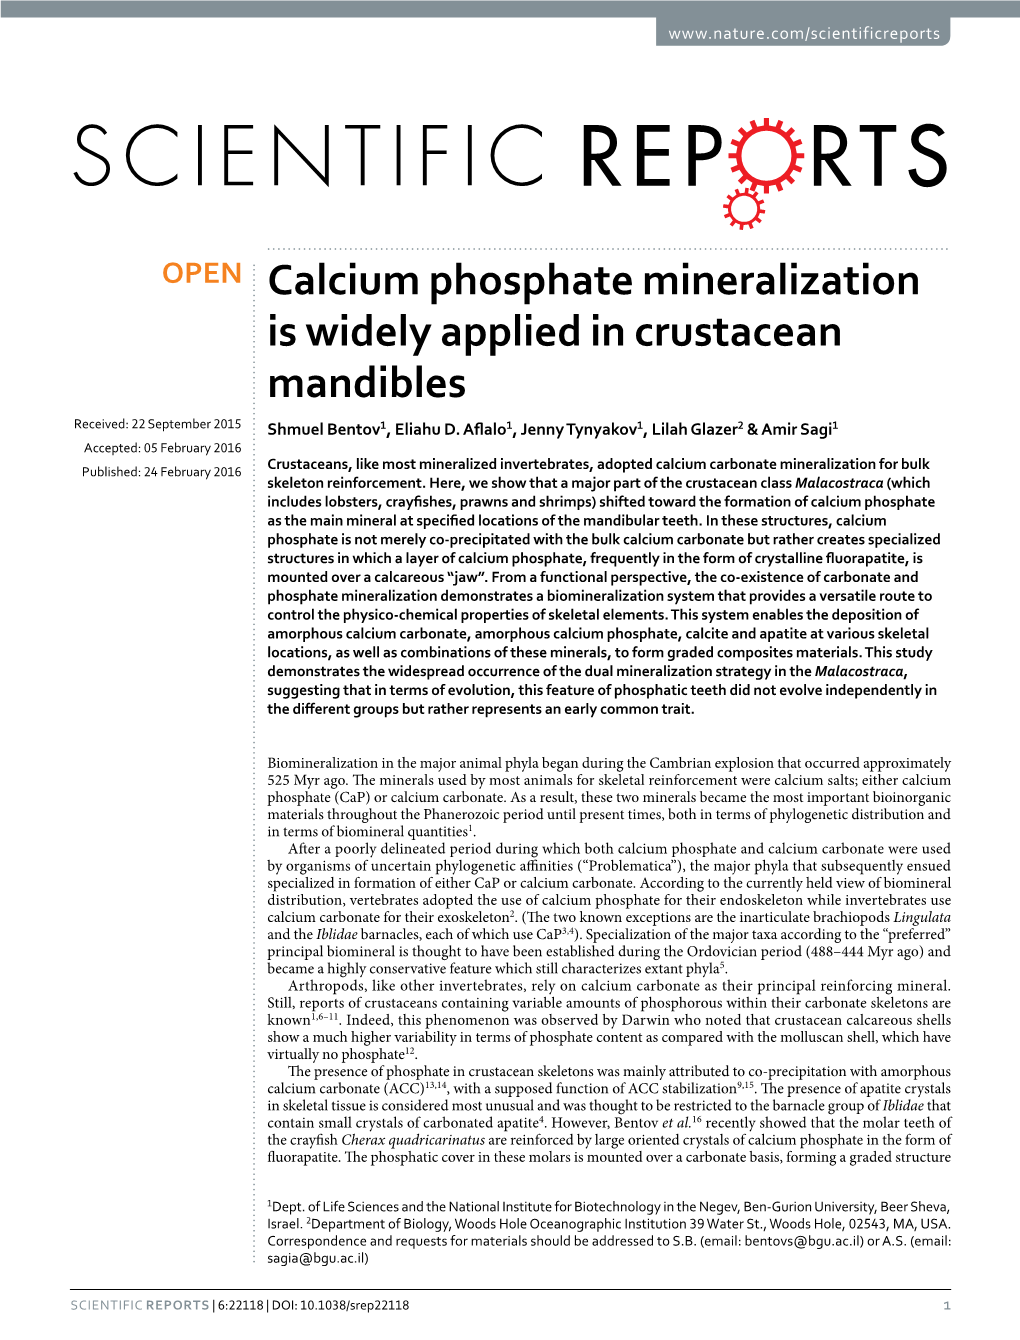 Calcium Phosphate Mineralization Is Widely Applied in Crustacean Mandibles Received: 22 September 2015 Shmuel Bentov1, Eliahu D